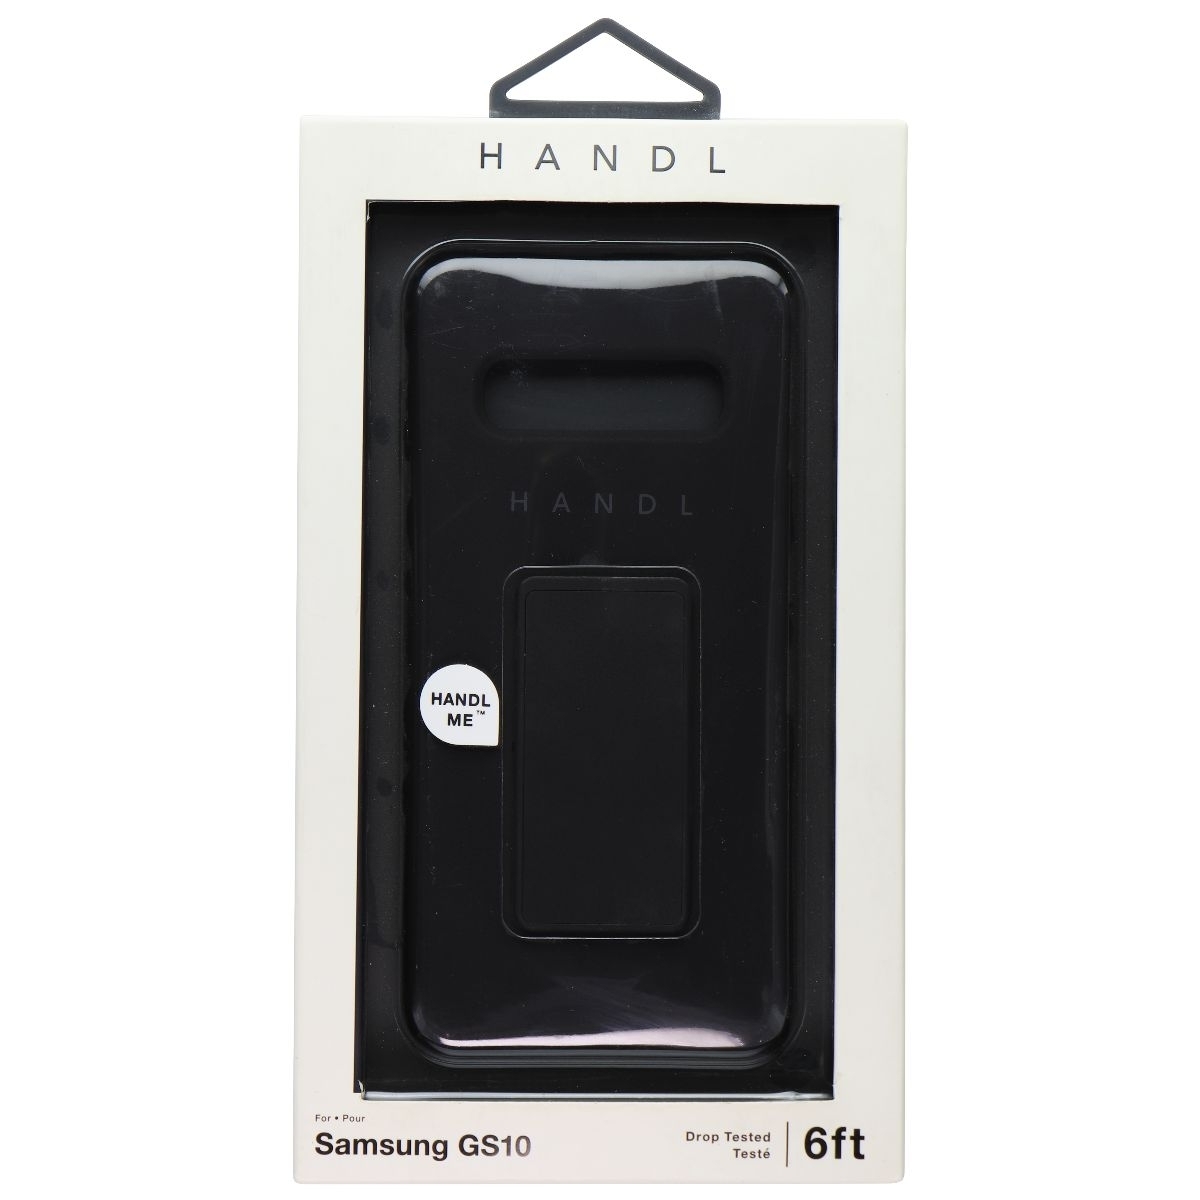 HANDL Hard Case With Elastic Handle For Samsung Galaxy S10 - Black (Refurbished)